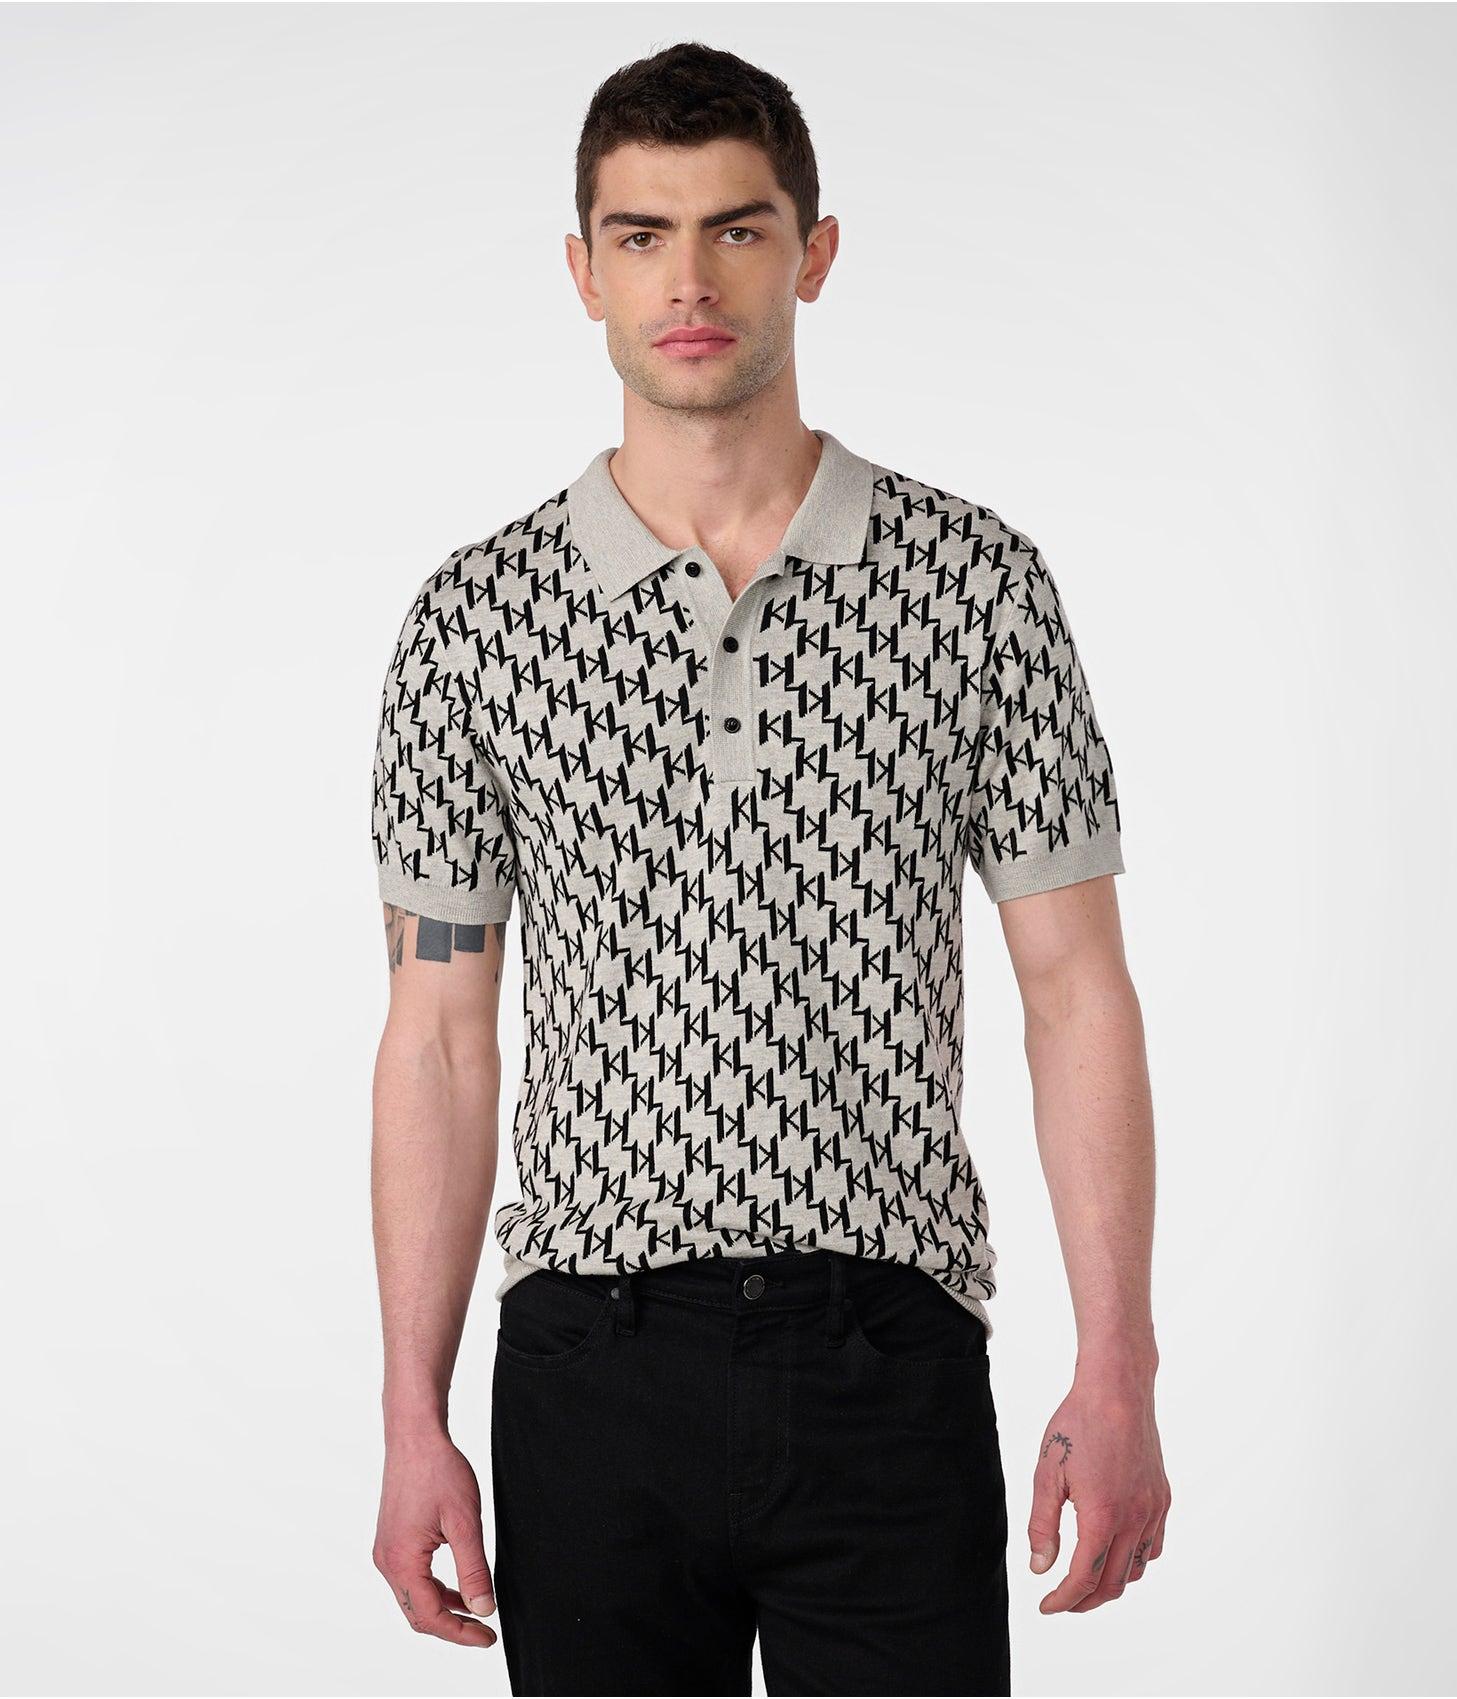 Louis Vuitton Men's Black Cotton Allover Logos Printed T-Shirt size L